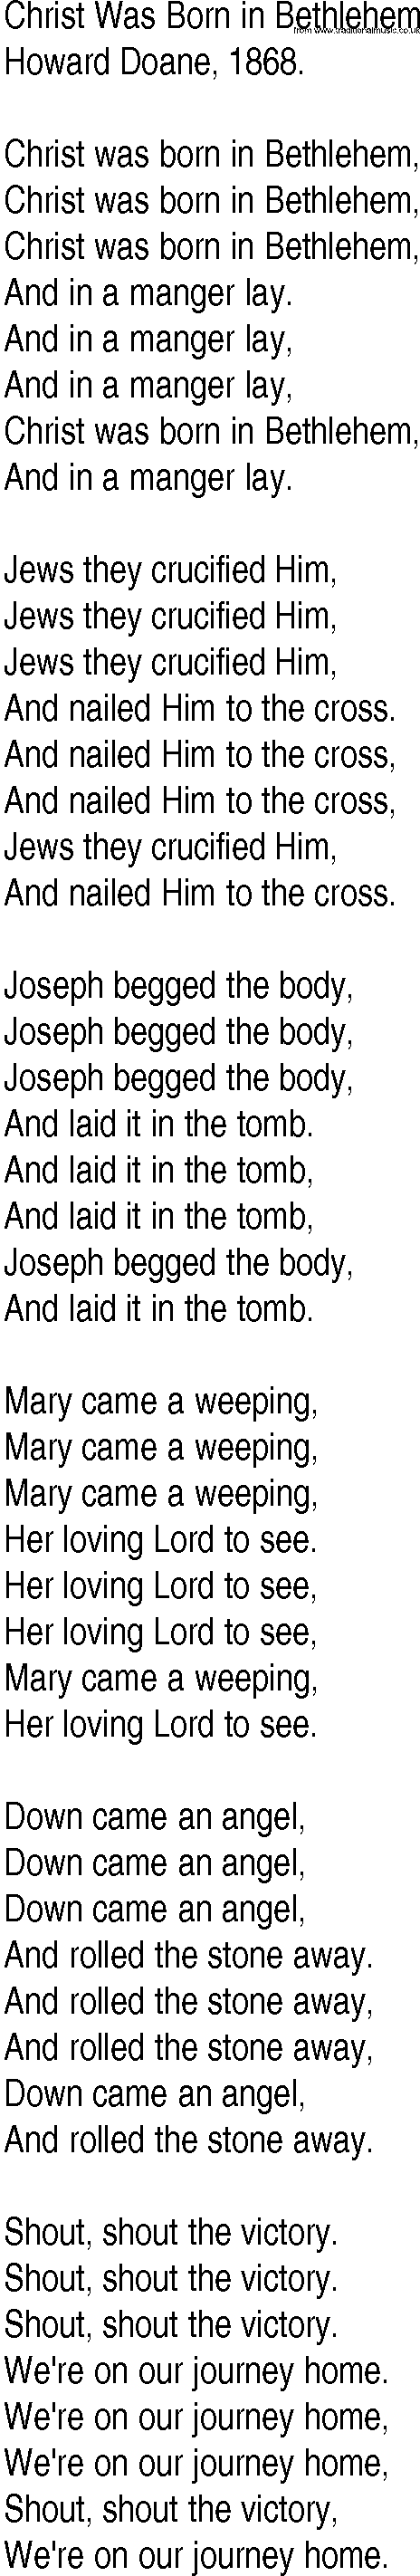 Hymn and Gospel Song: Christ Was Born in Bethlehem by Howard Doane lyrics